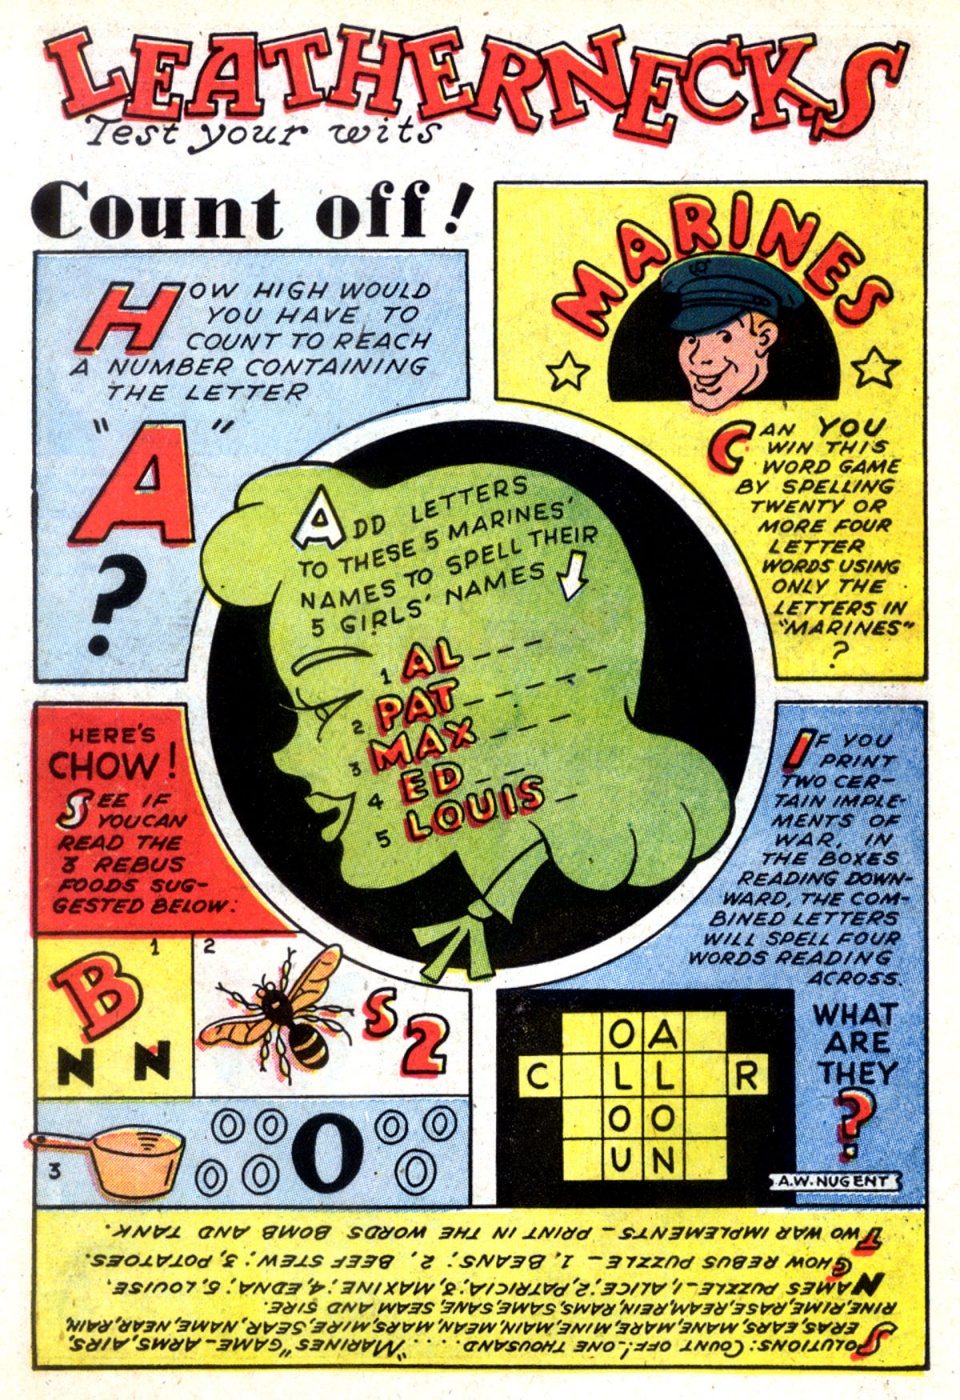 Anchors the Salt Water Daffy - Comics (b) (20)